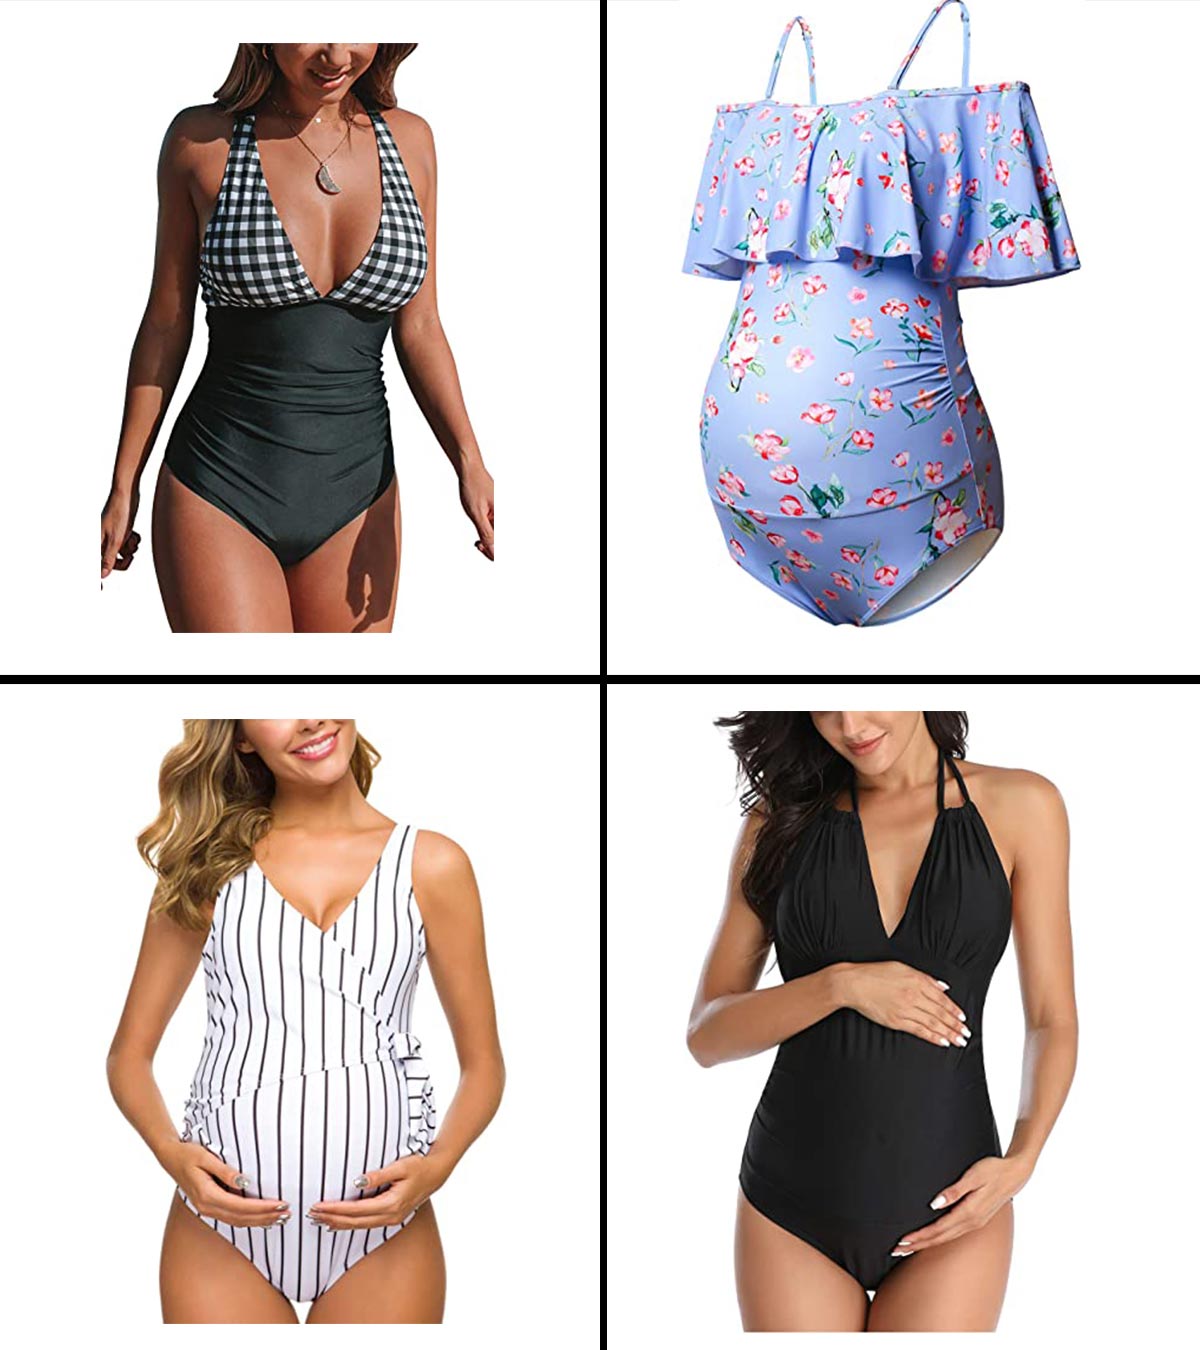 Hotouch Women Summer Swimwear Two Pieces Tankini Set Bikini Bottoms 6 Colors S-XXXL